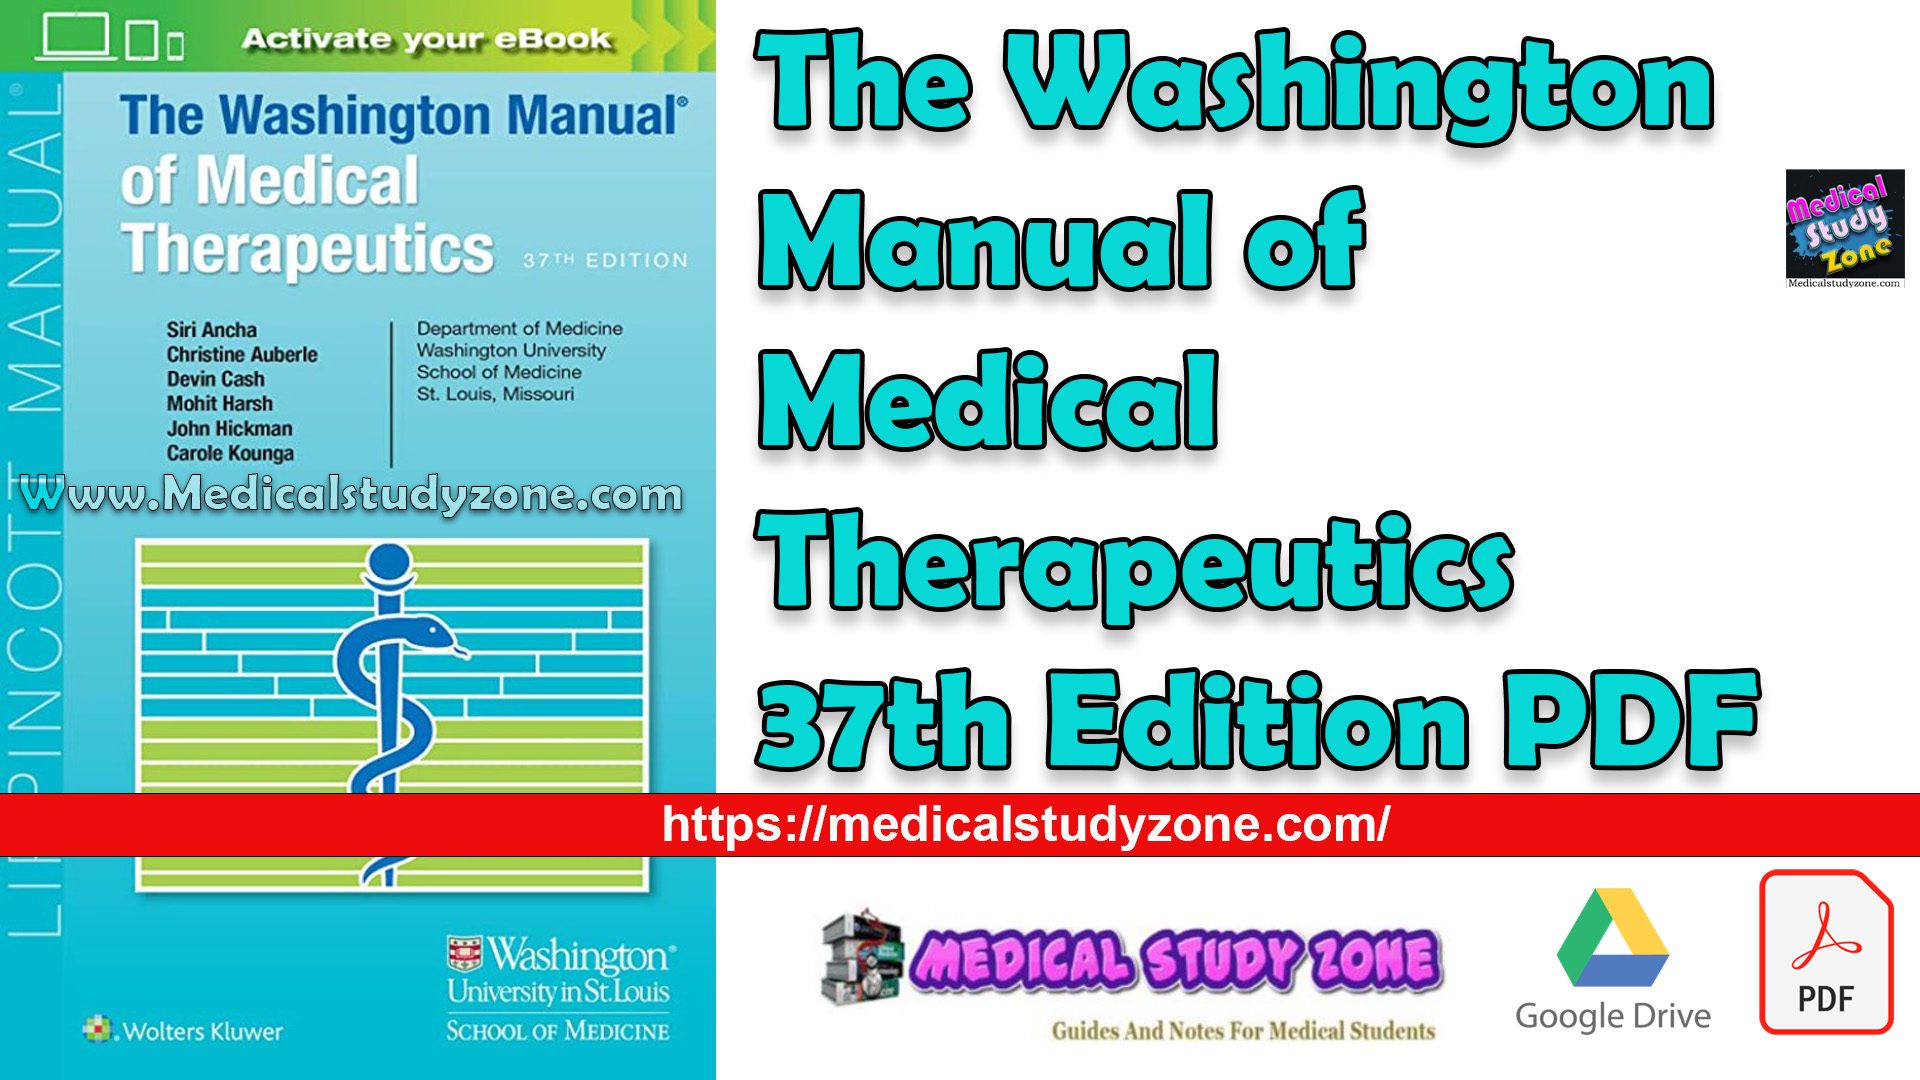 The Washington Manual of Medical Therapeutics 37th Edition PDF Free Download